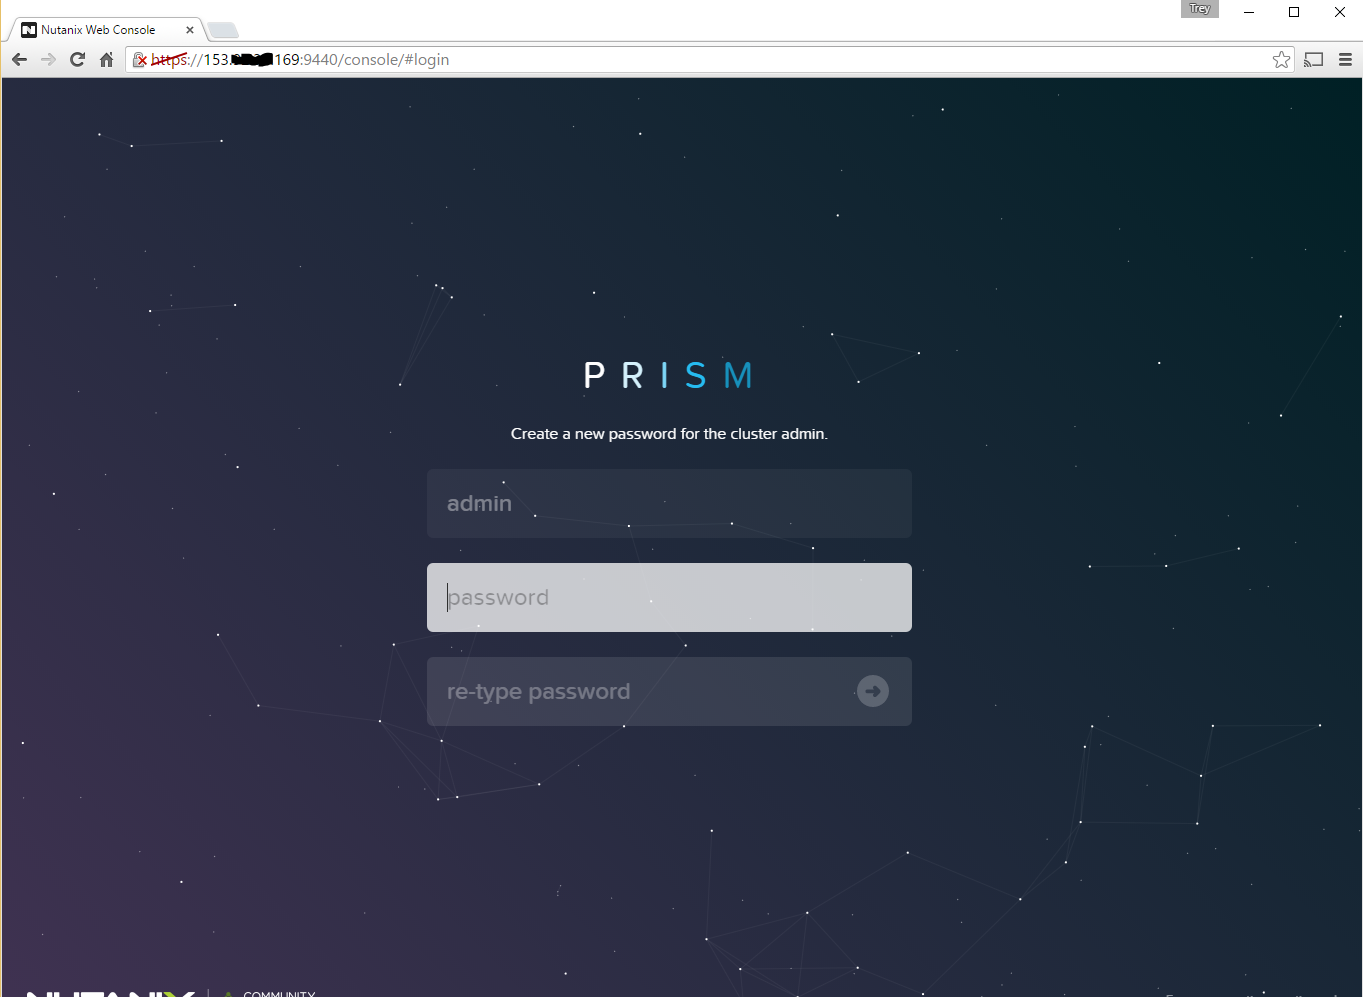 Prism: Enter credentials